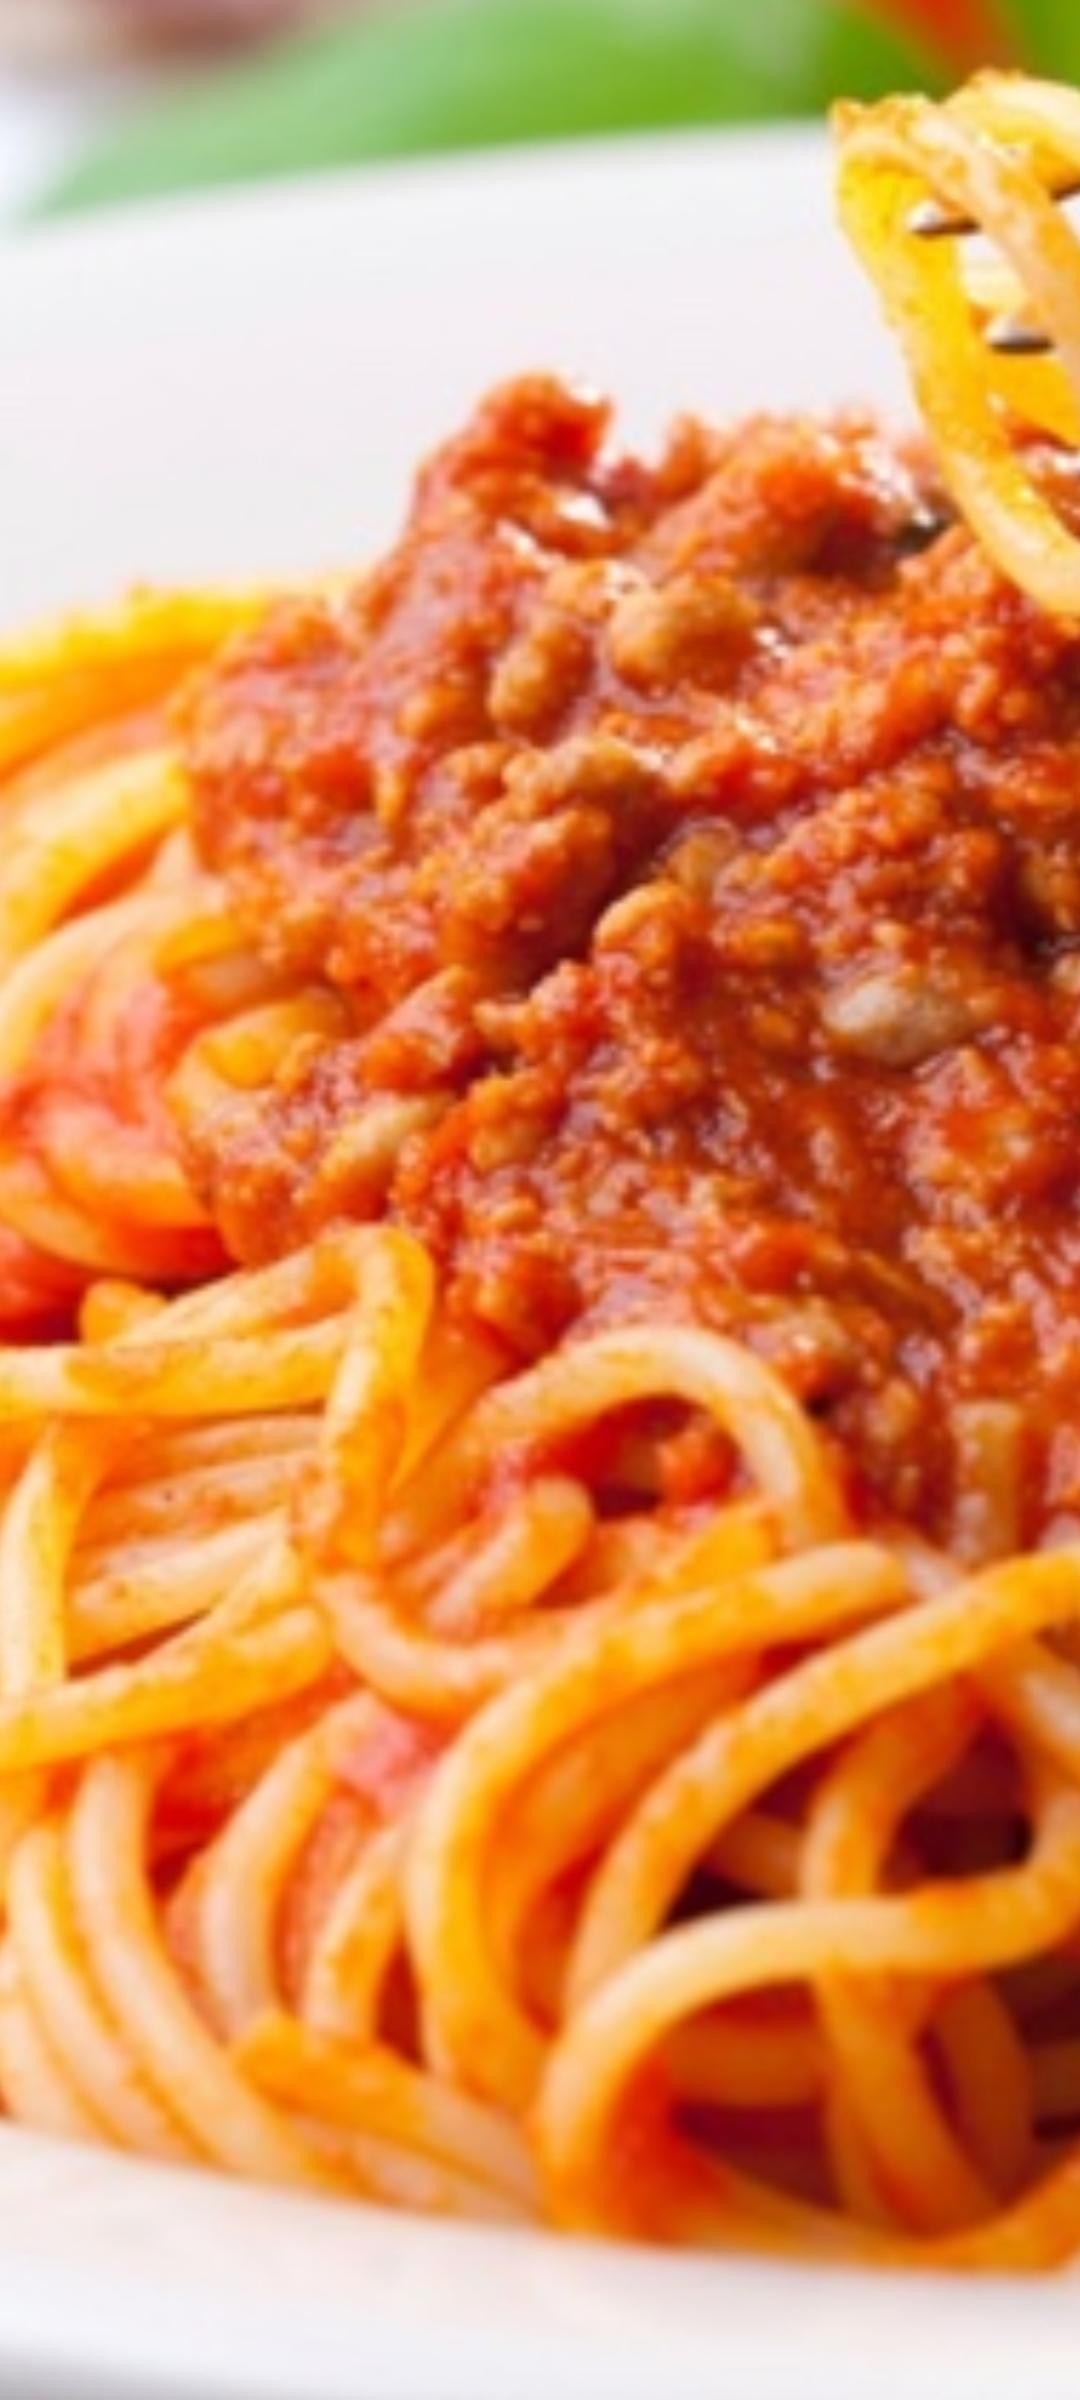 Spaghetti with meat sauce (Signature)